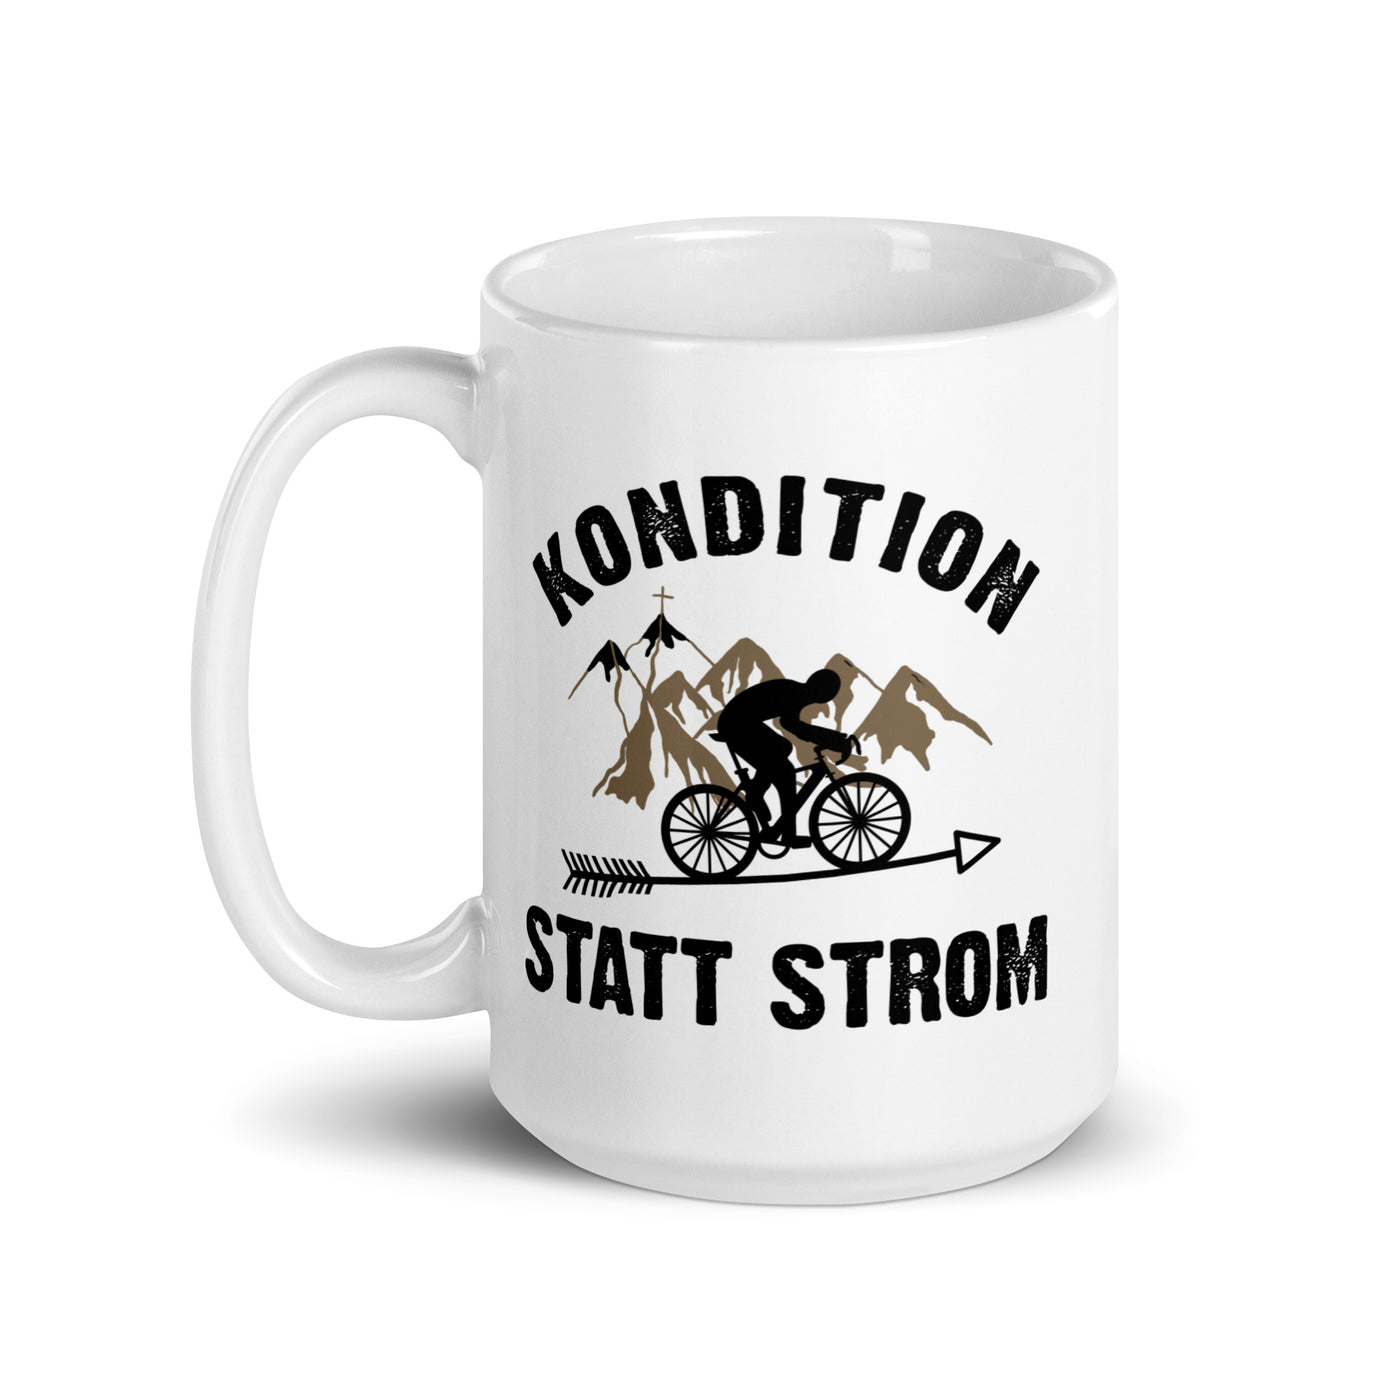 Kondition Statt Strom - Tasse fahrrad mountainbike